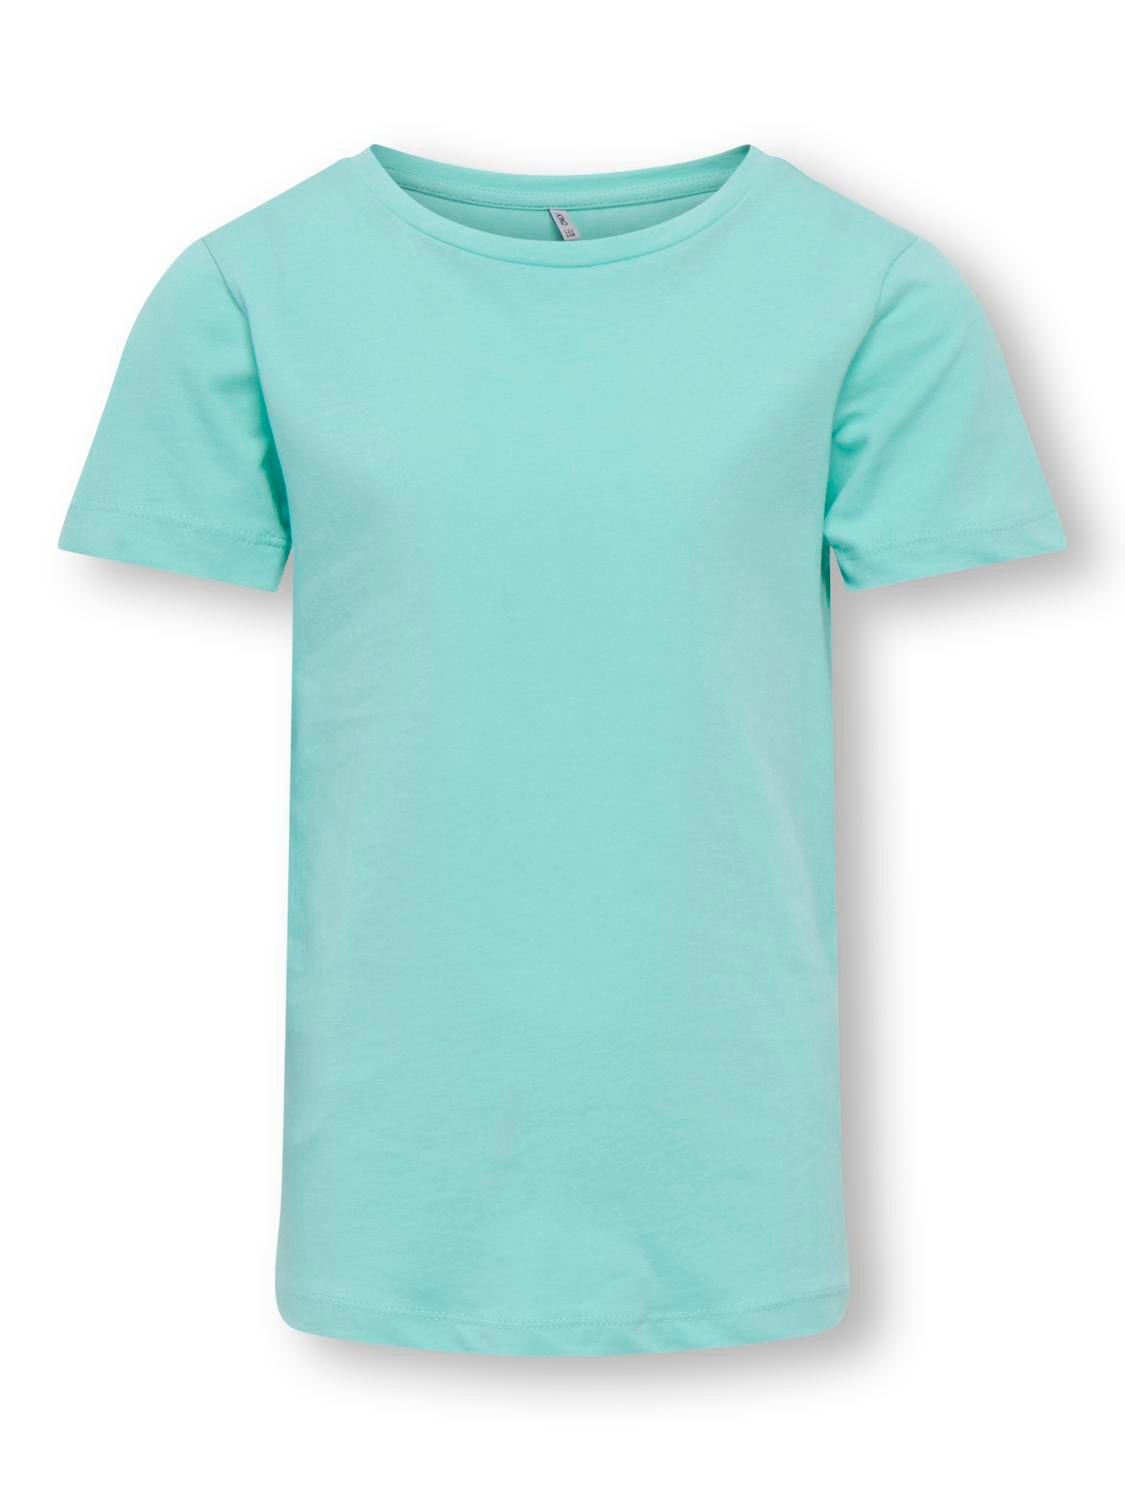 ONLY Camisetas Corte regular Cuello redondo -Aruba Blue - 15281565